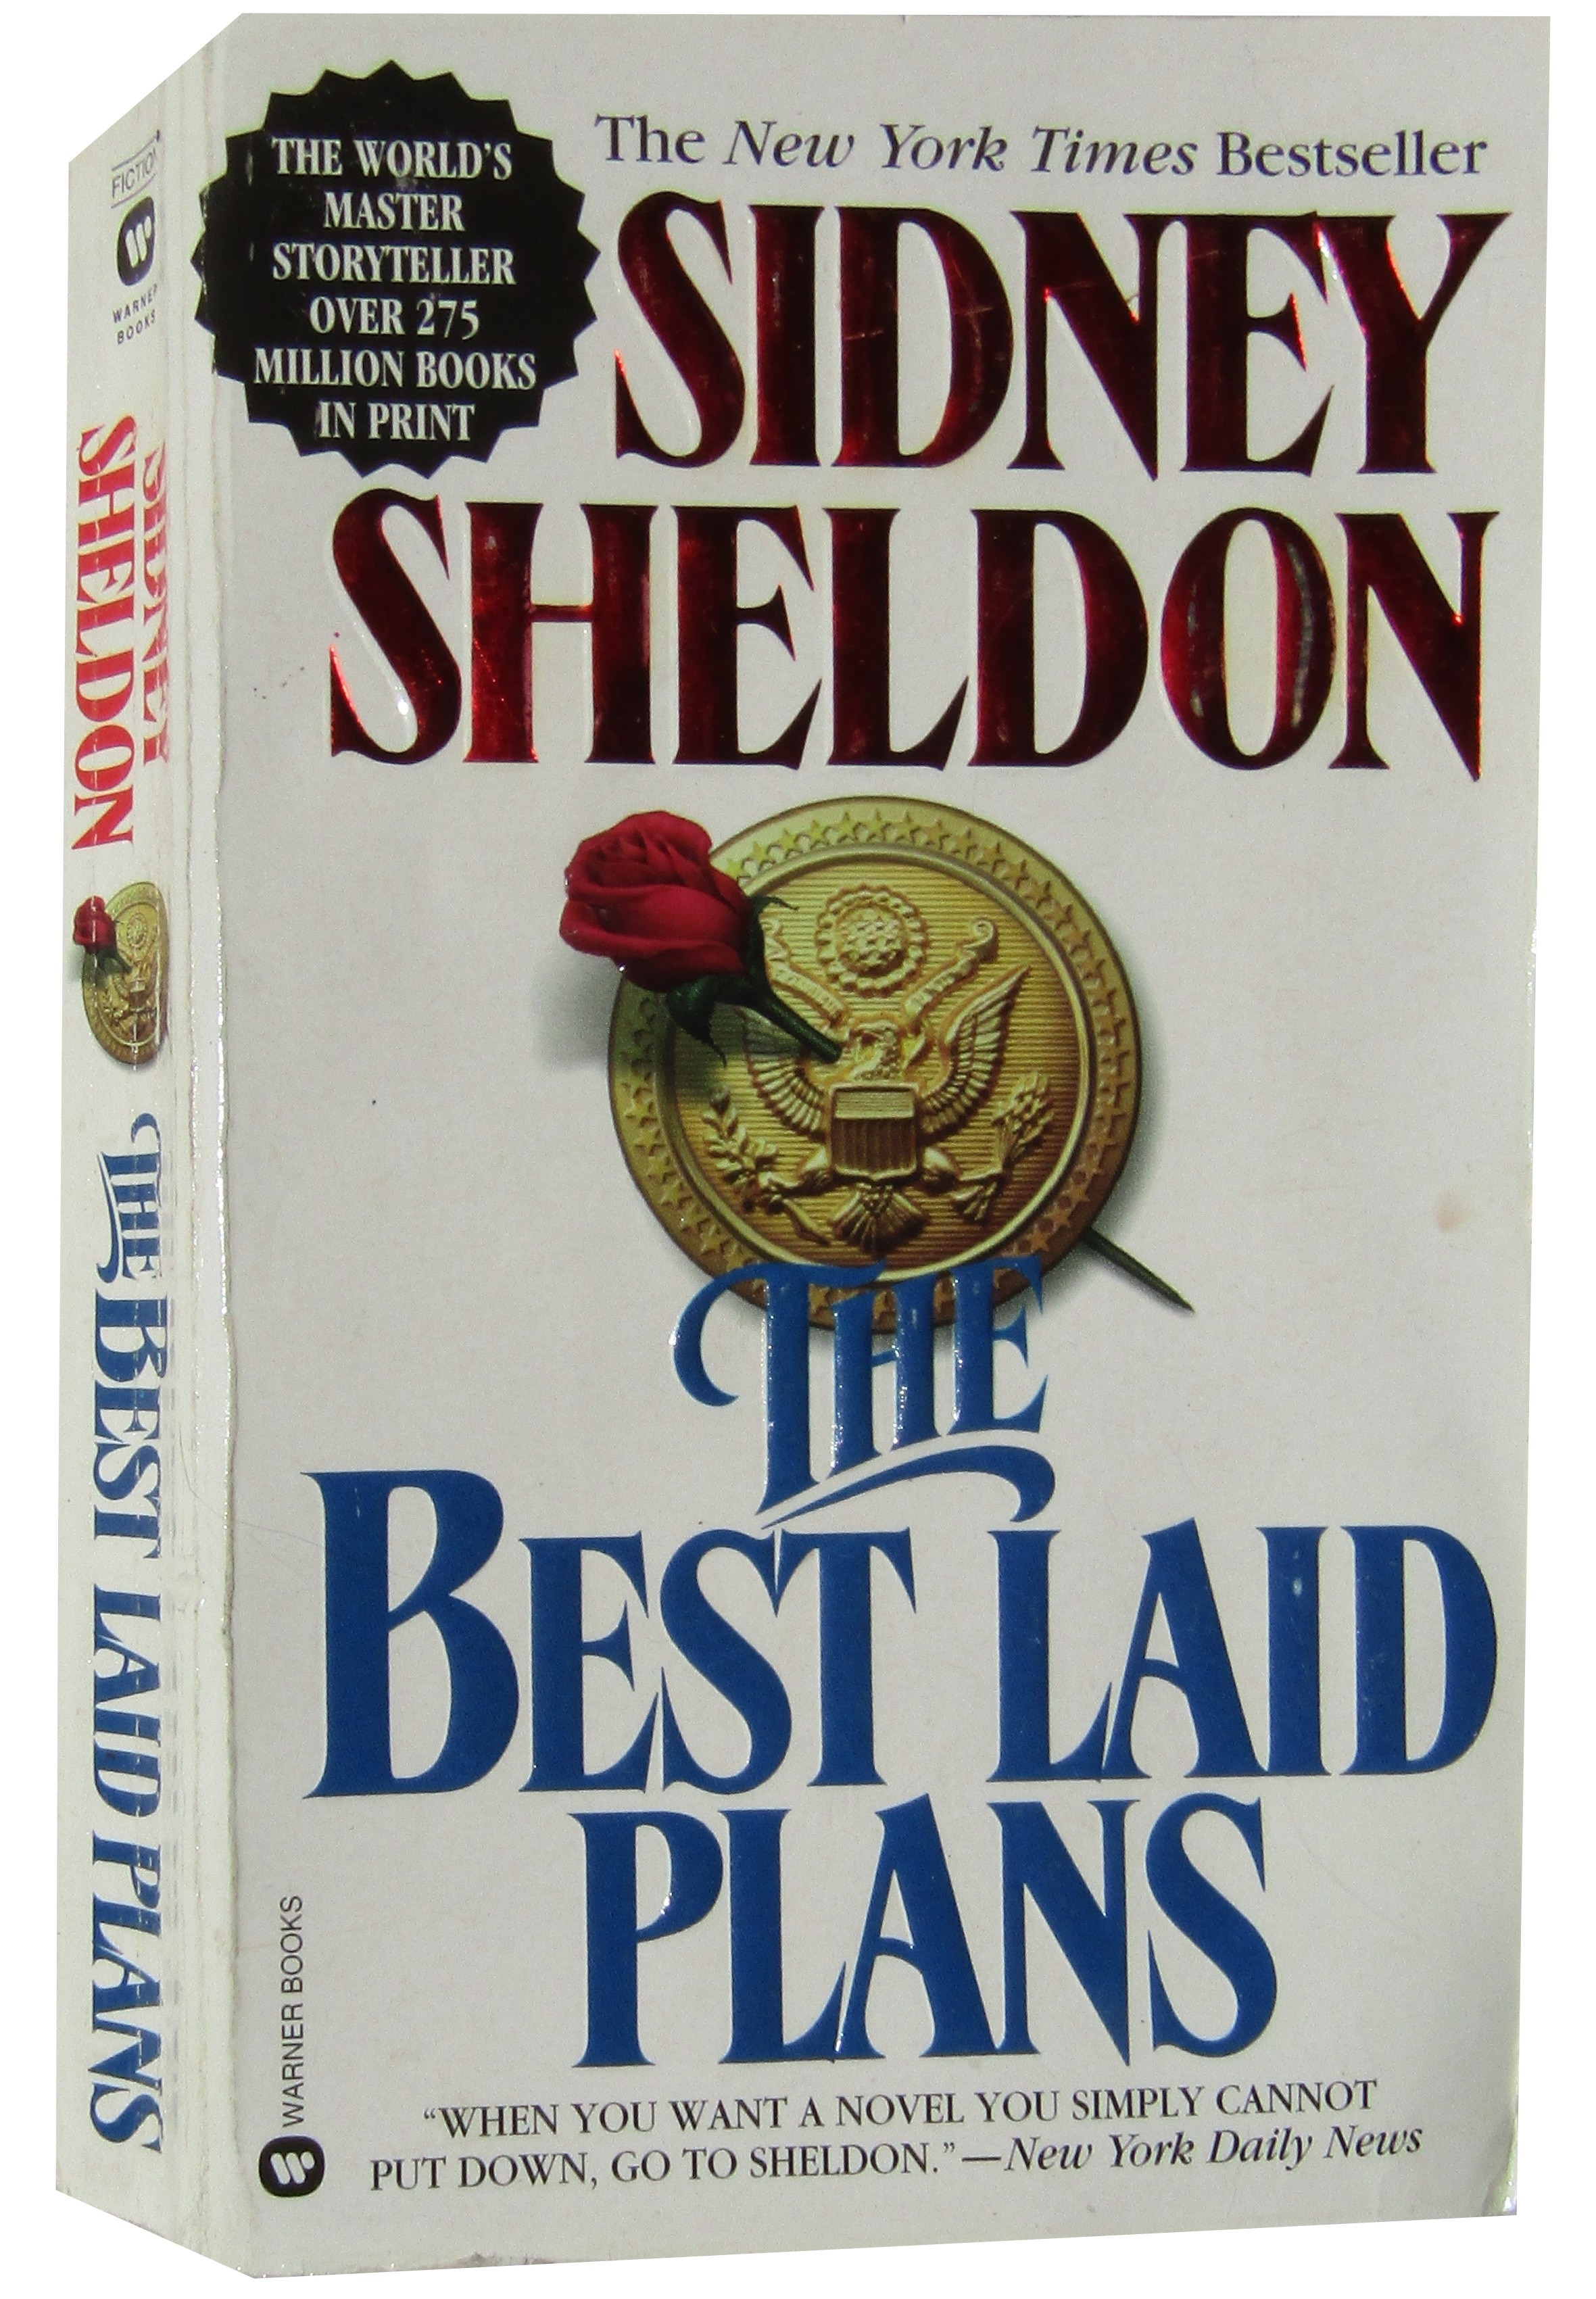 Sidney Sheldon books. Best laid Plans. Фото книг Сидни Шелдона. День памяти Шелдон Сидни открытка.